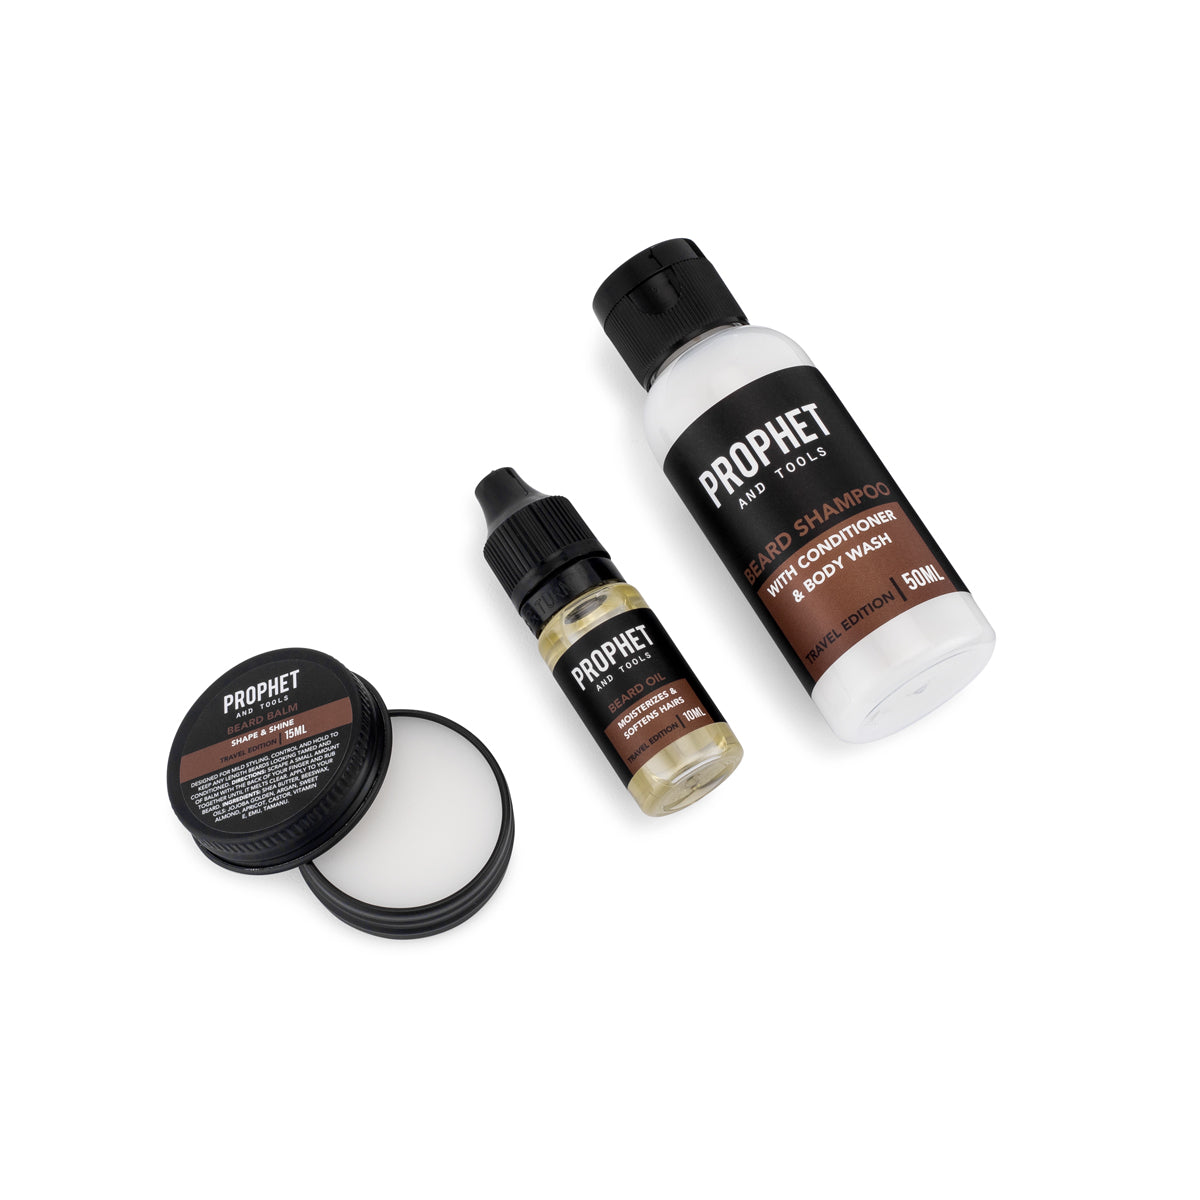 Travel beard grooming kit balm, oil and shampoo